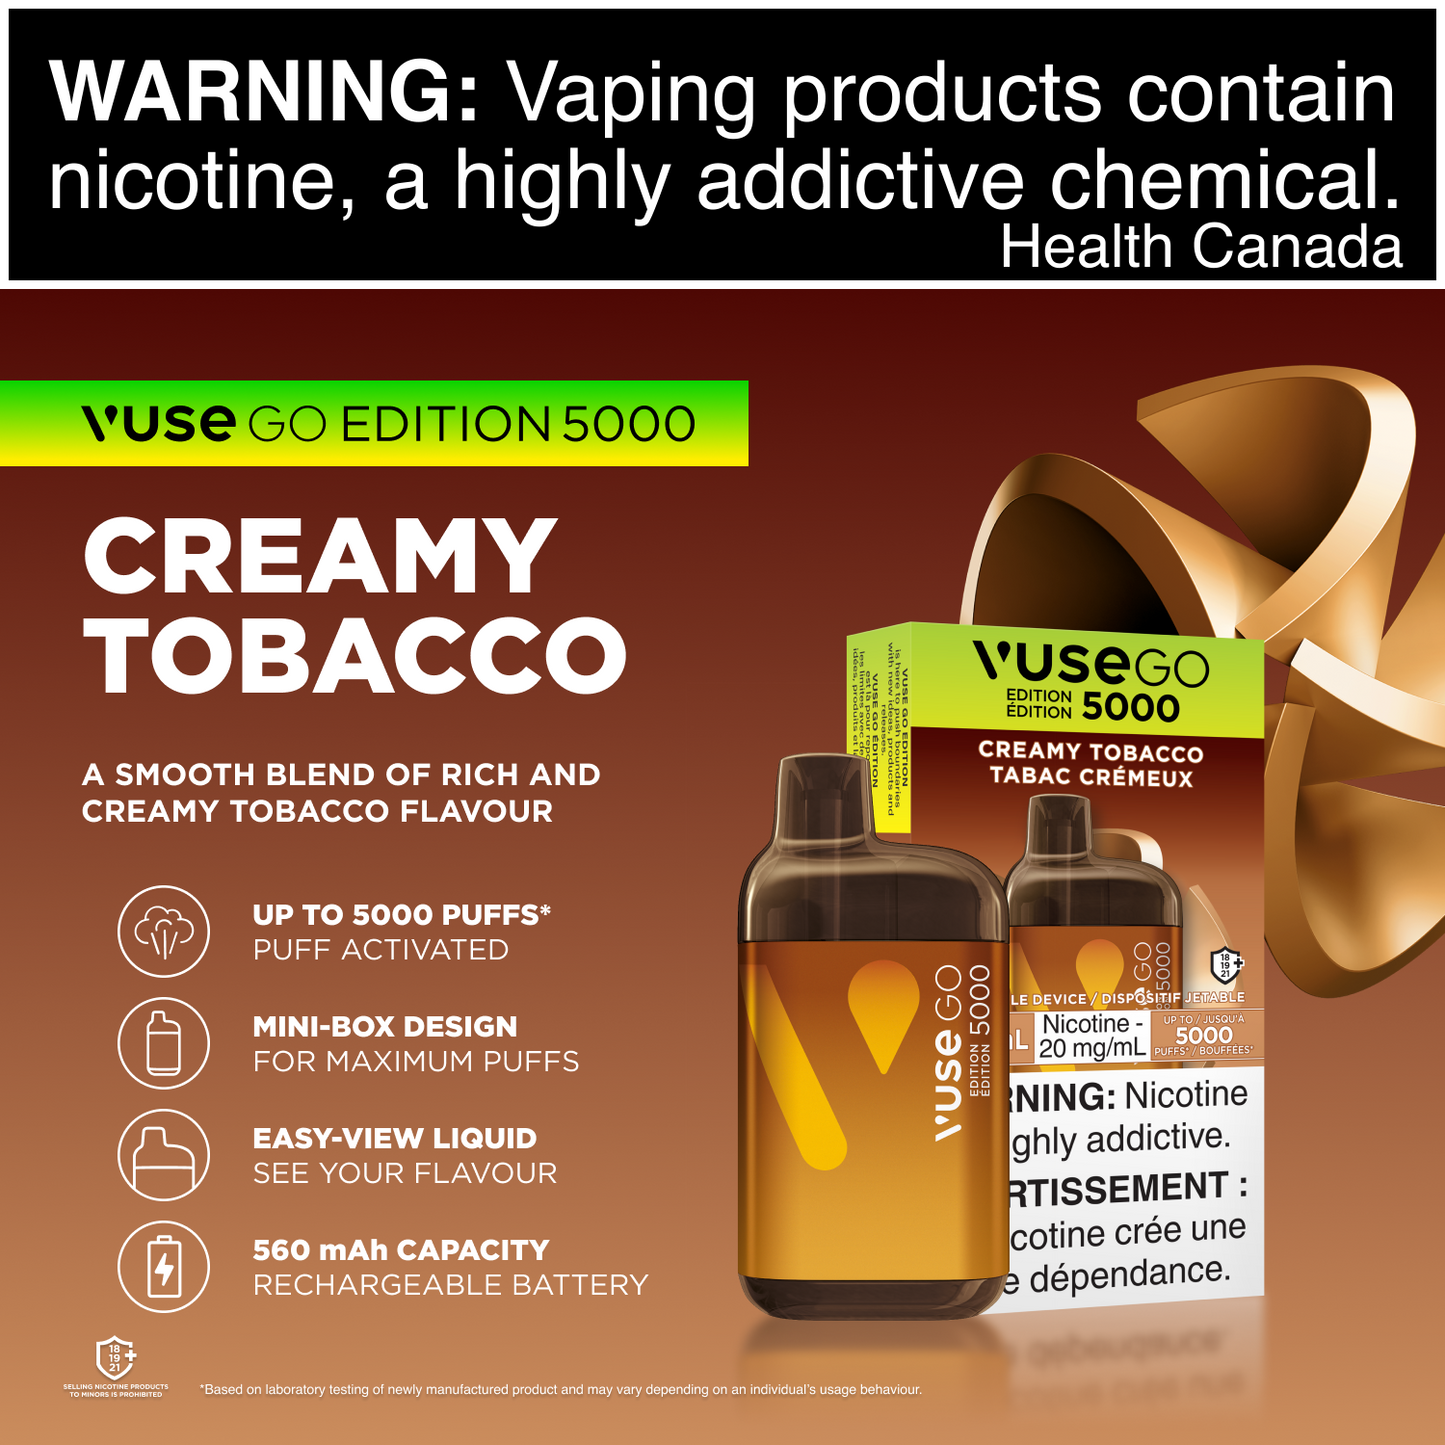 Vuse Go Edition 5000 Creamy Tobacco